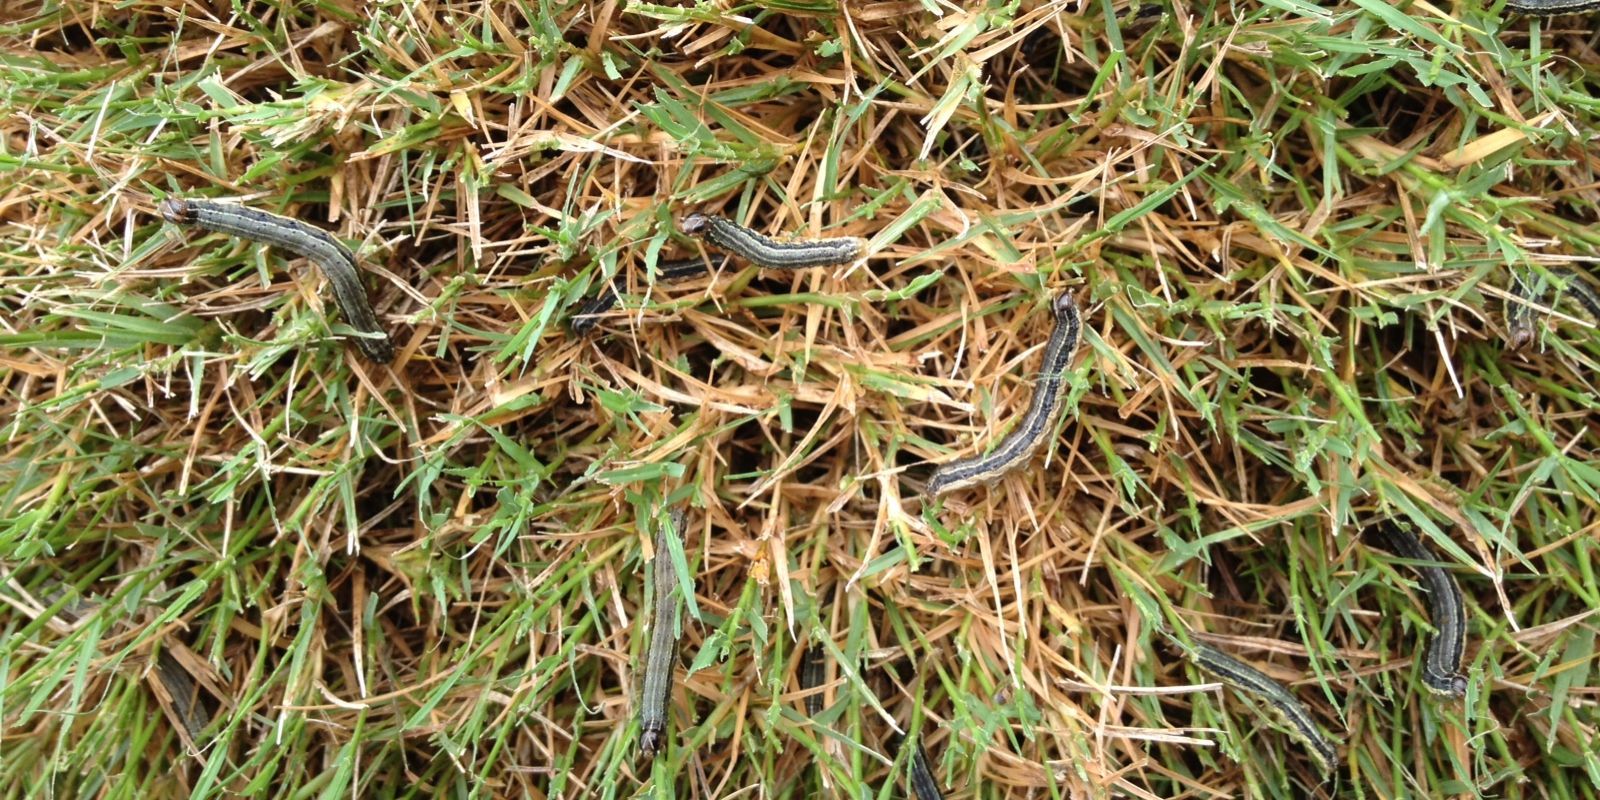 army worms damage lawn